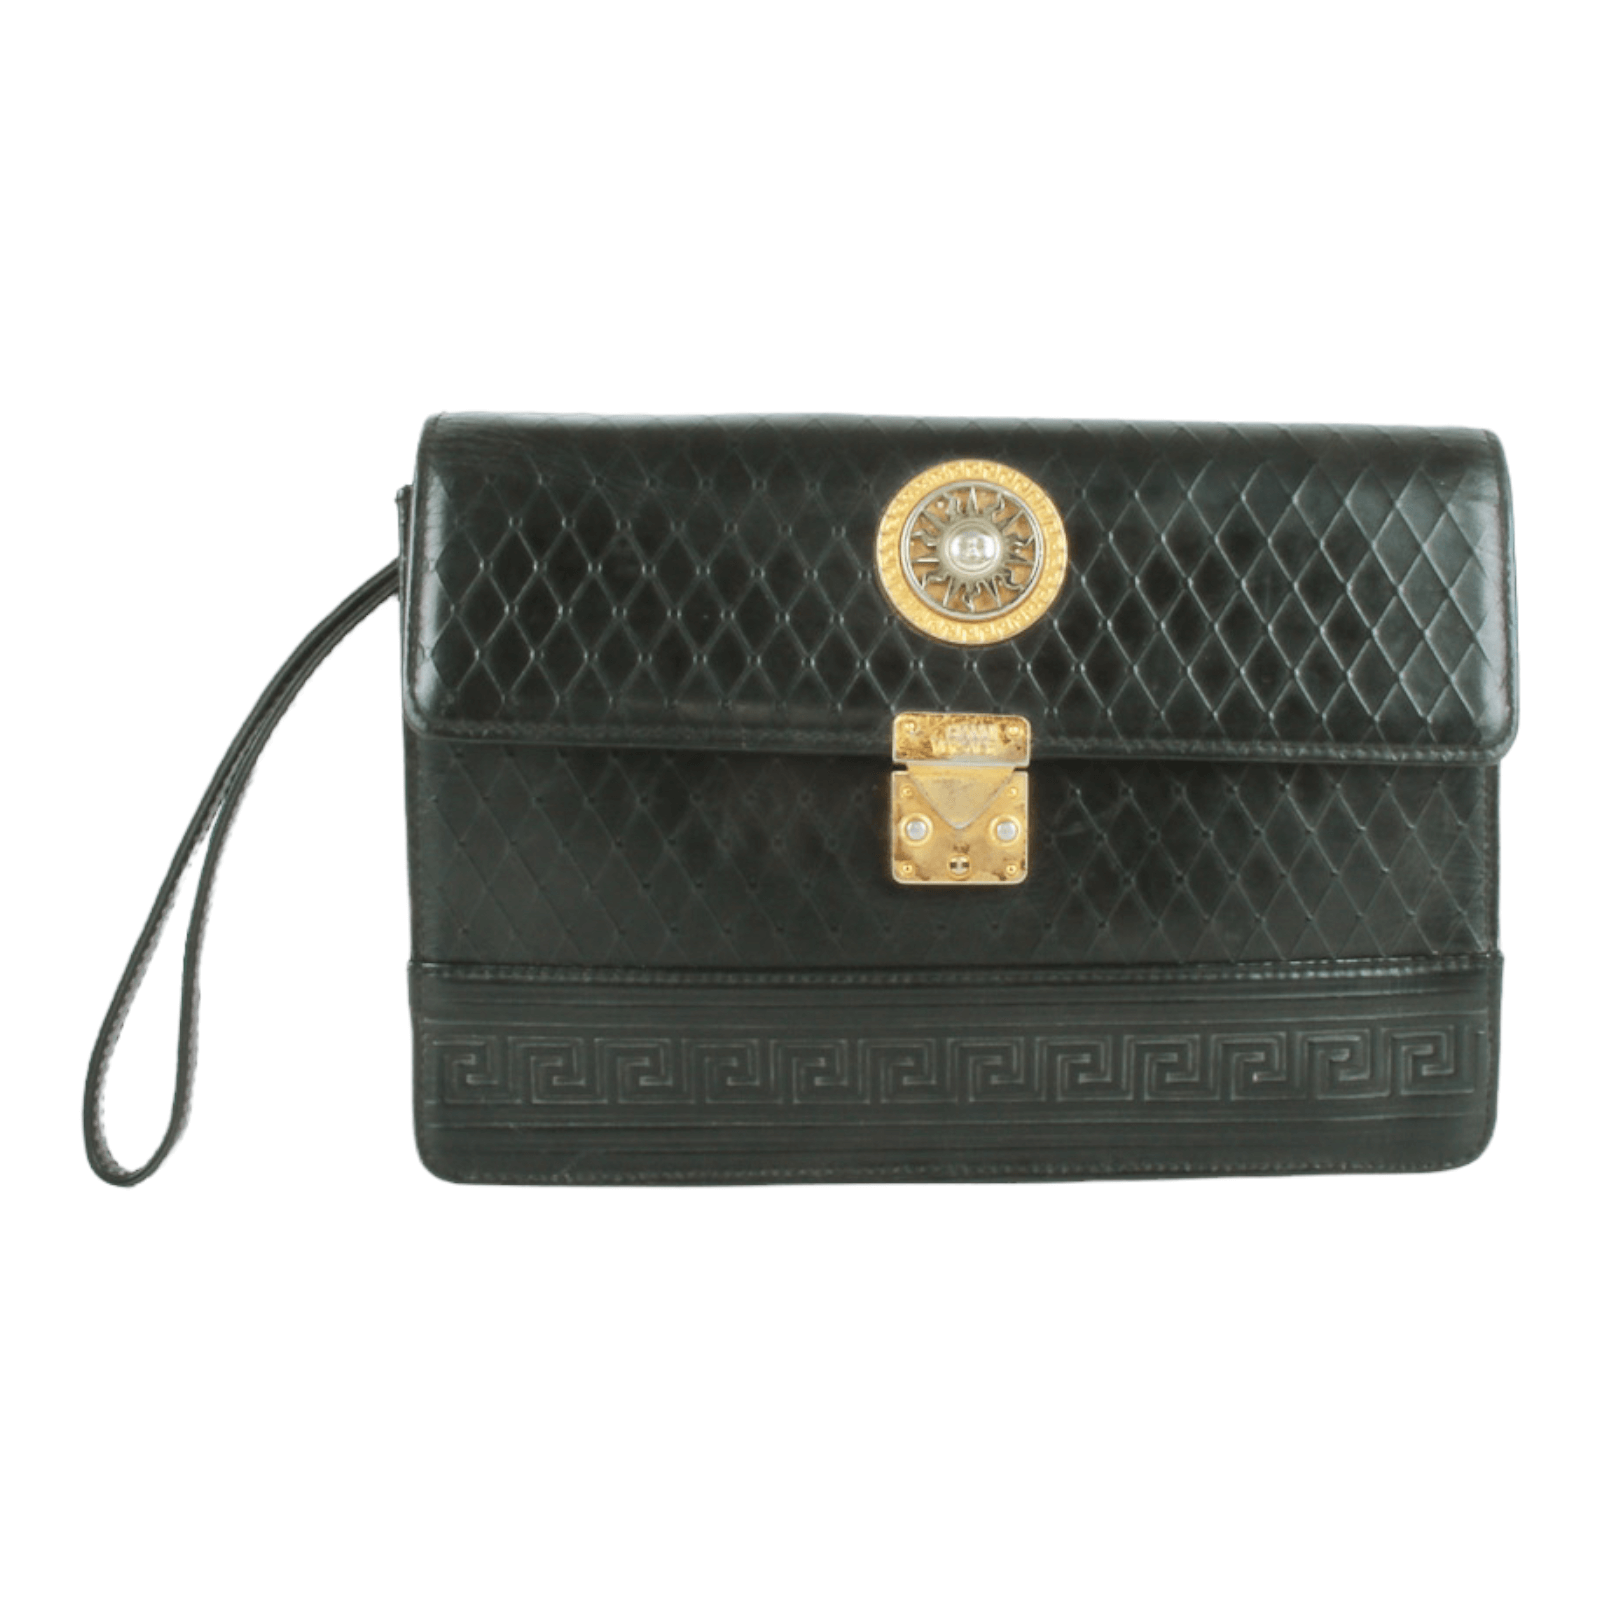 Gianni Versace Vintage Bag -   Versace purses, Boxy bags, Versace bag